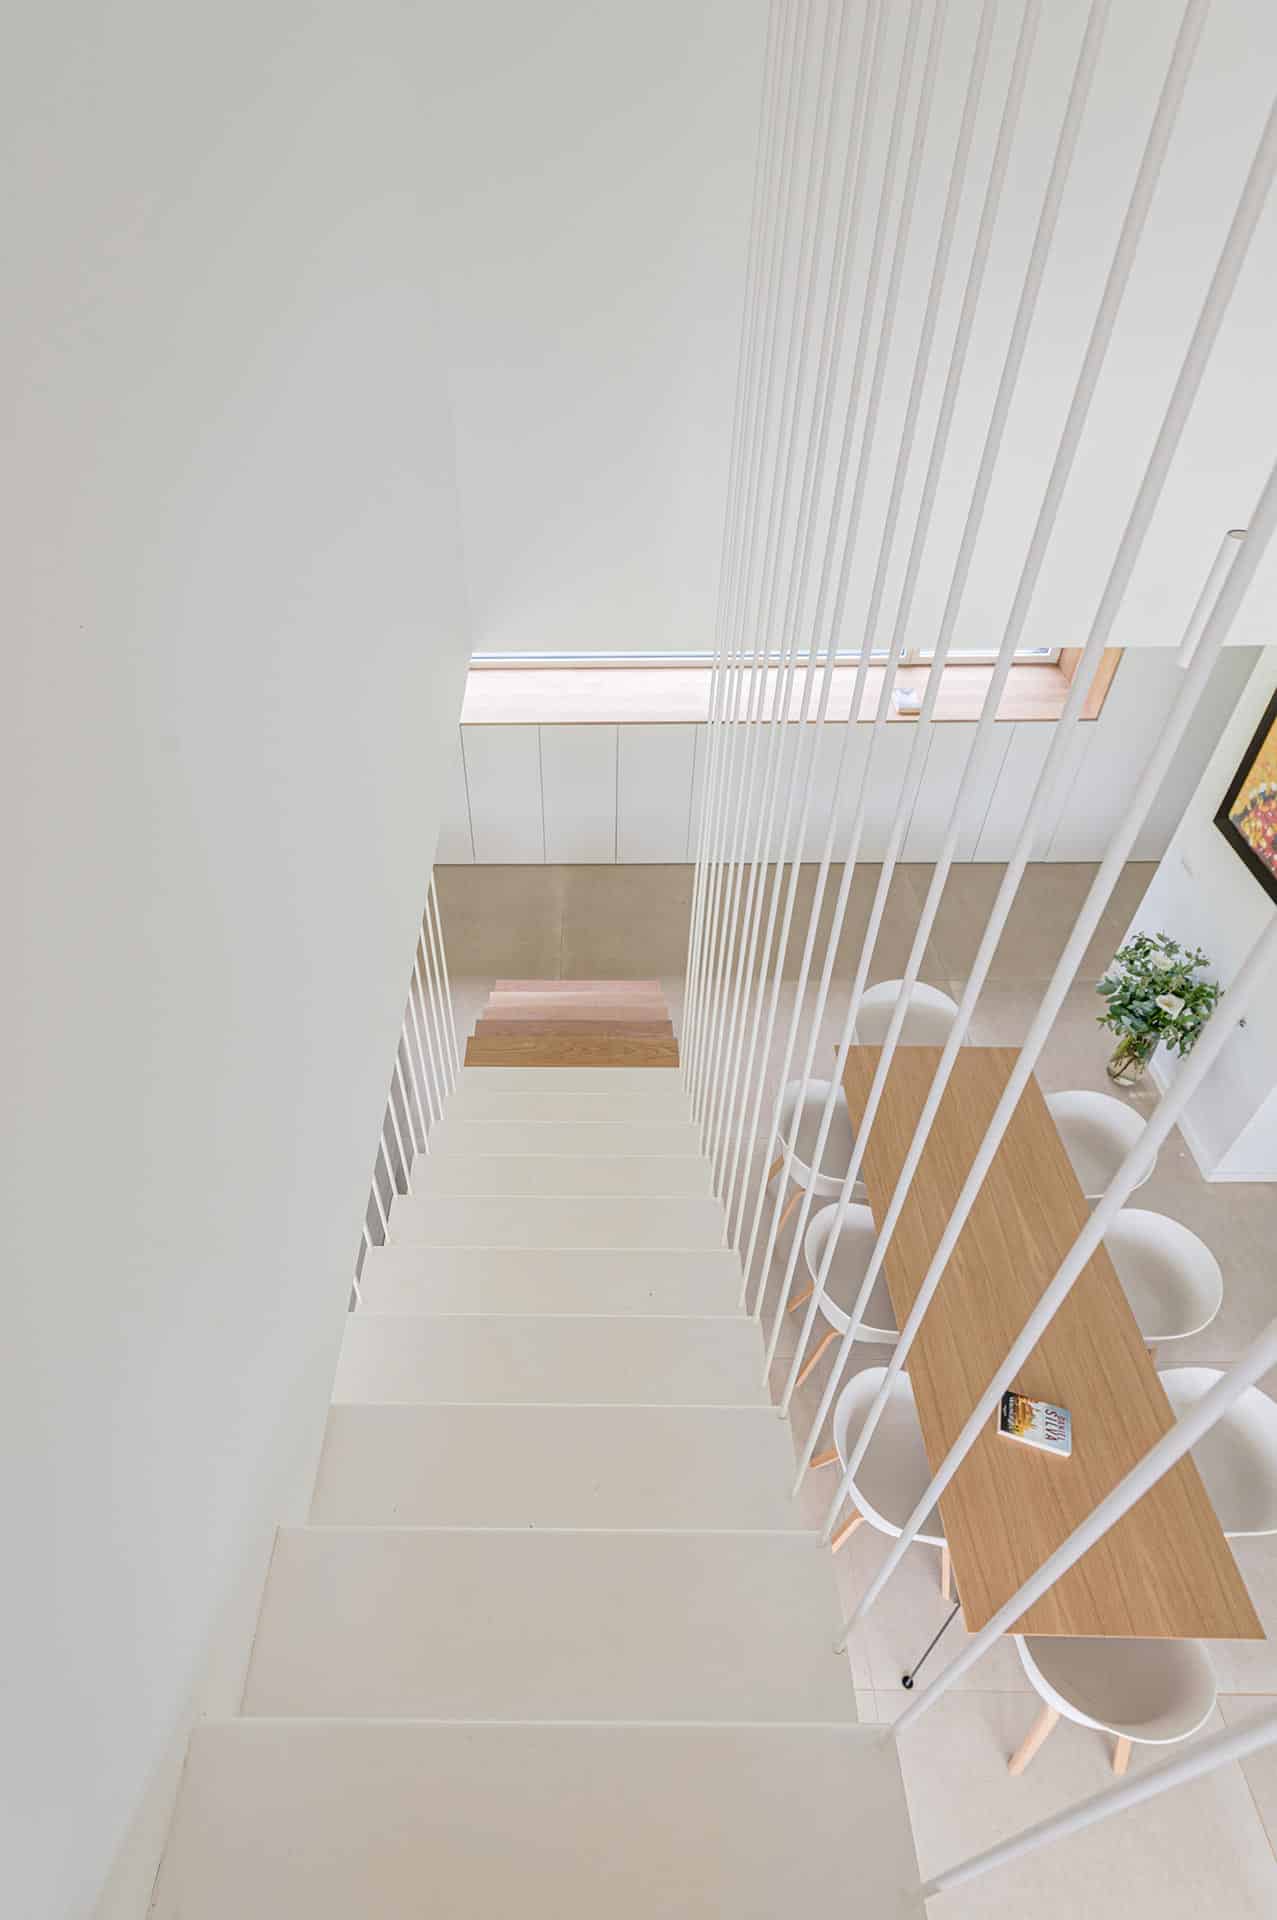 Escalera con tensores en casa moderna de lujo diseñada por Moah Arquitectos en Pámanes